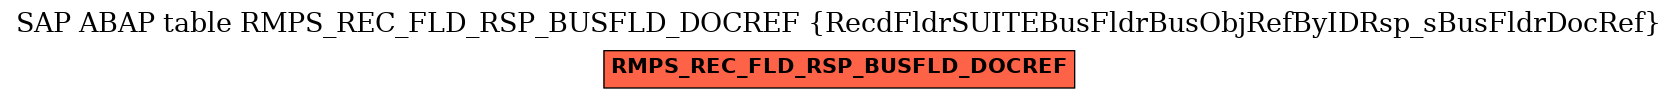 E-R Diagram for table RMPS_REC_FLD_RSP_BUSFLD_DOCREF (RecdFldrSUITEBusFldrBusObjRefByIDRsp_sBusFldrDocRef)